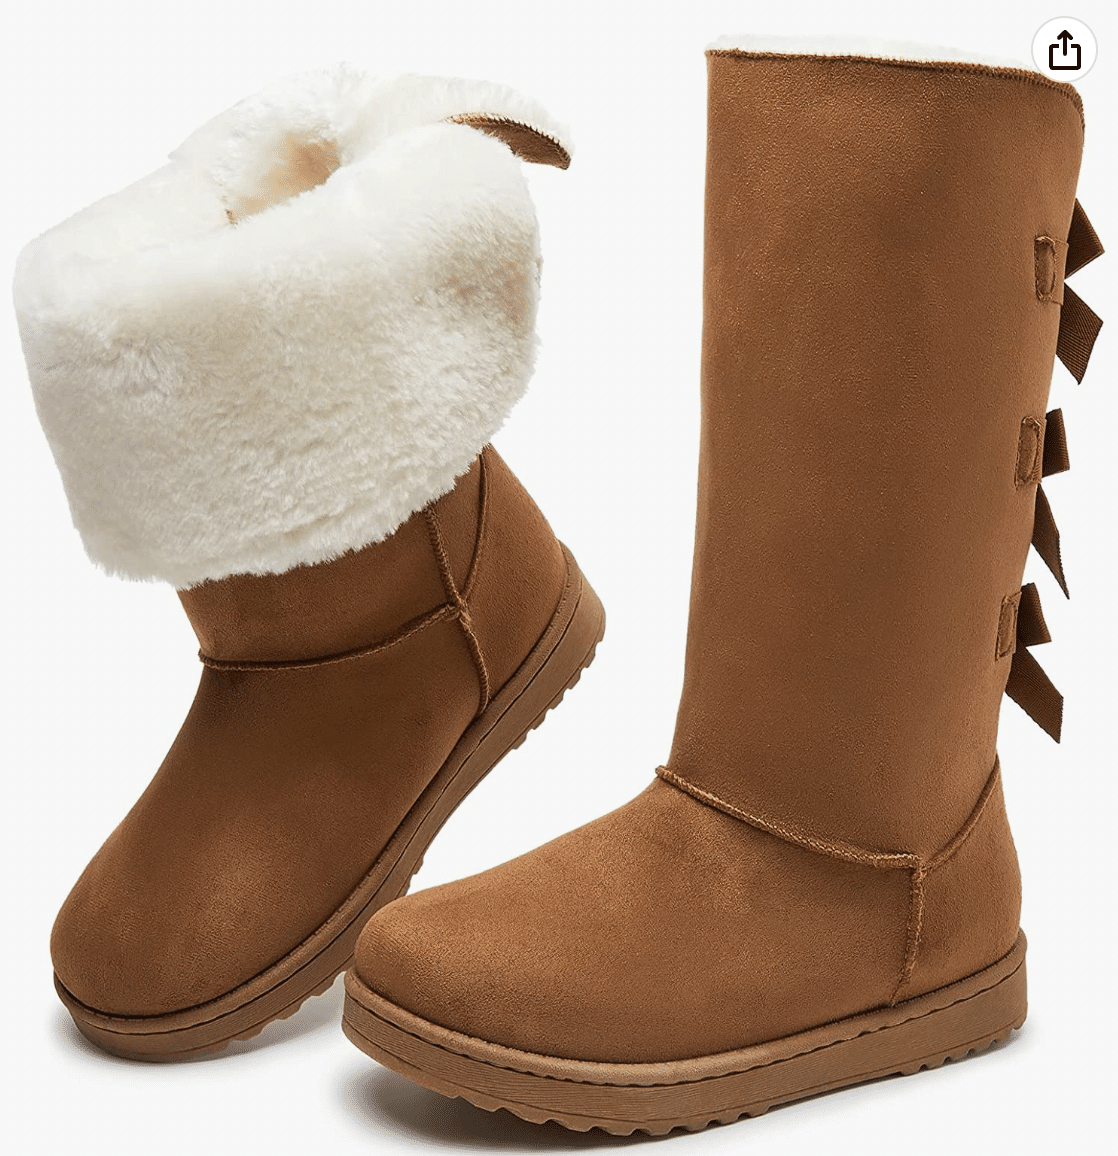 Women's Mid-Calf Winter Snow Boots Warm Fur Boots Wide Calf Slip on Lookalike UGG Boots